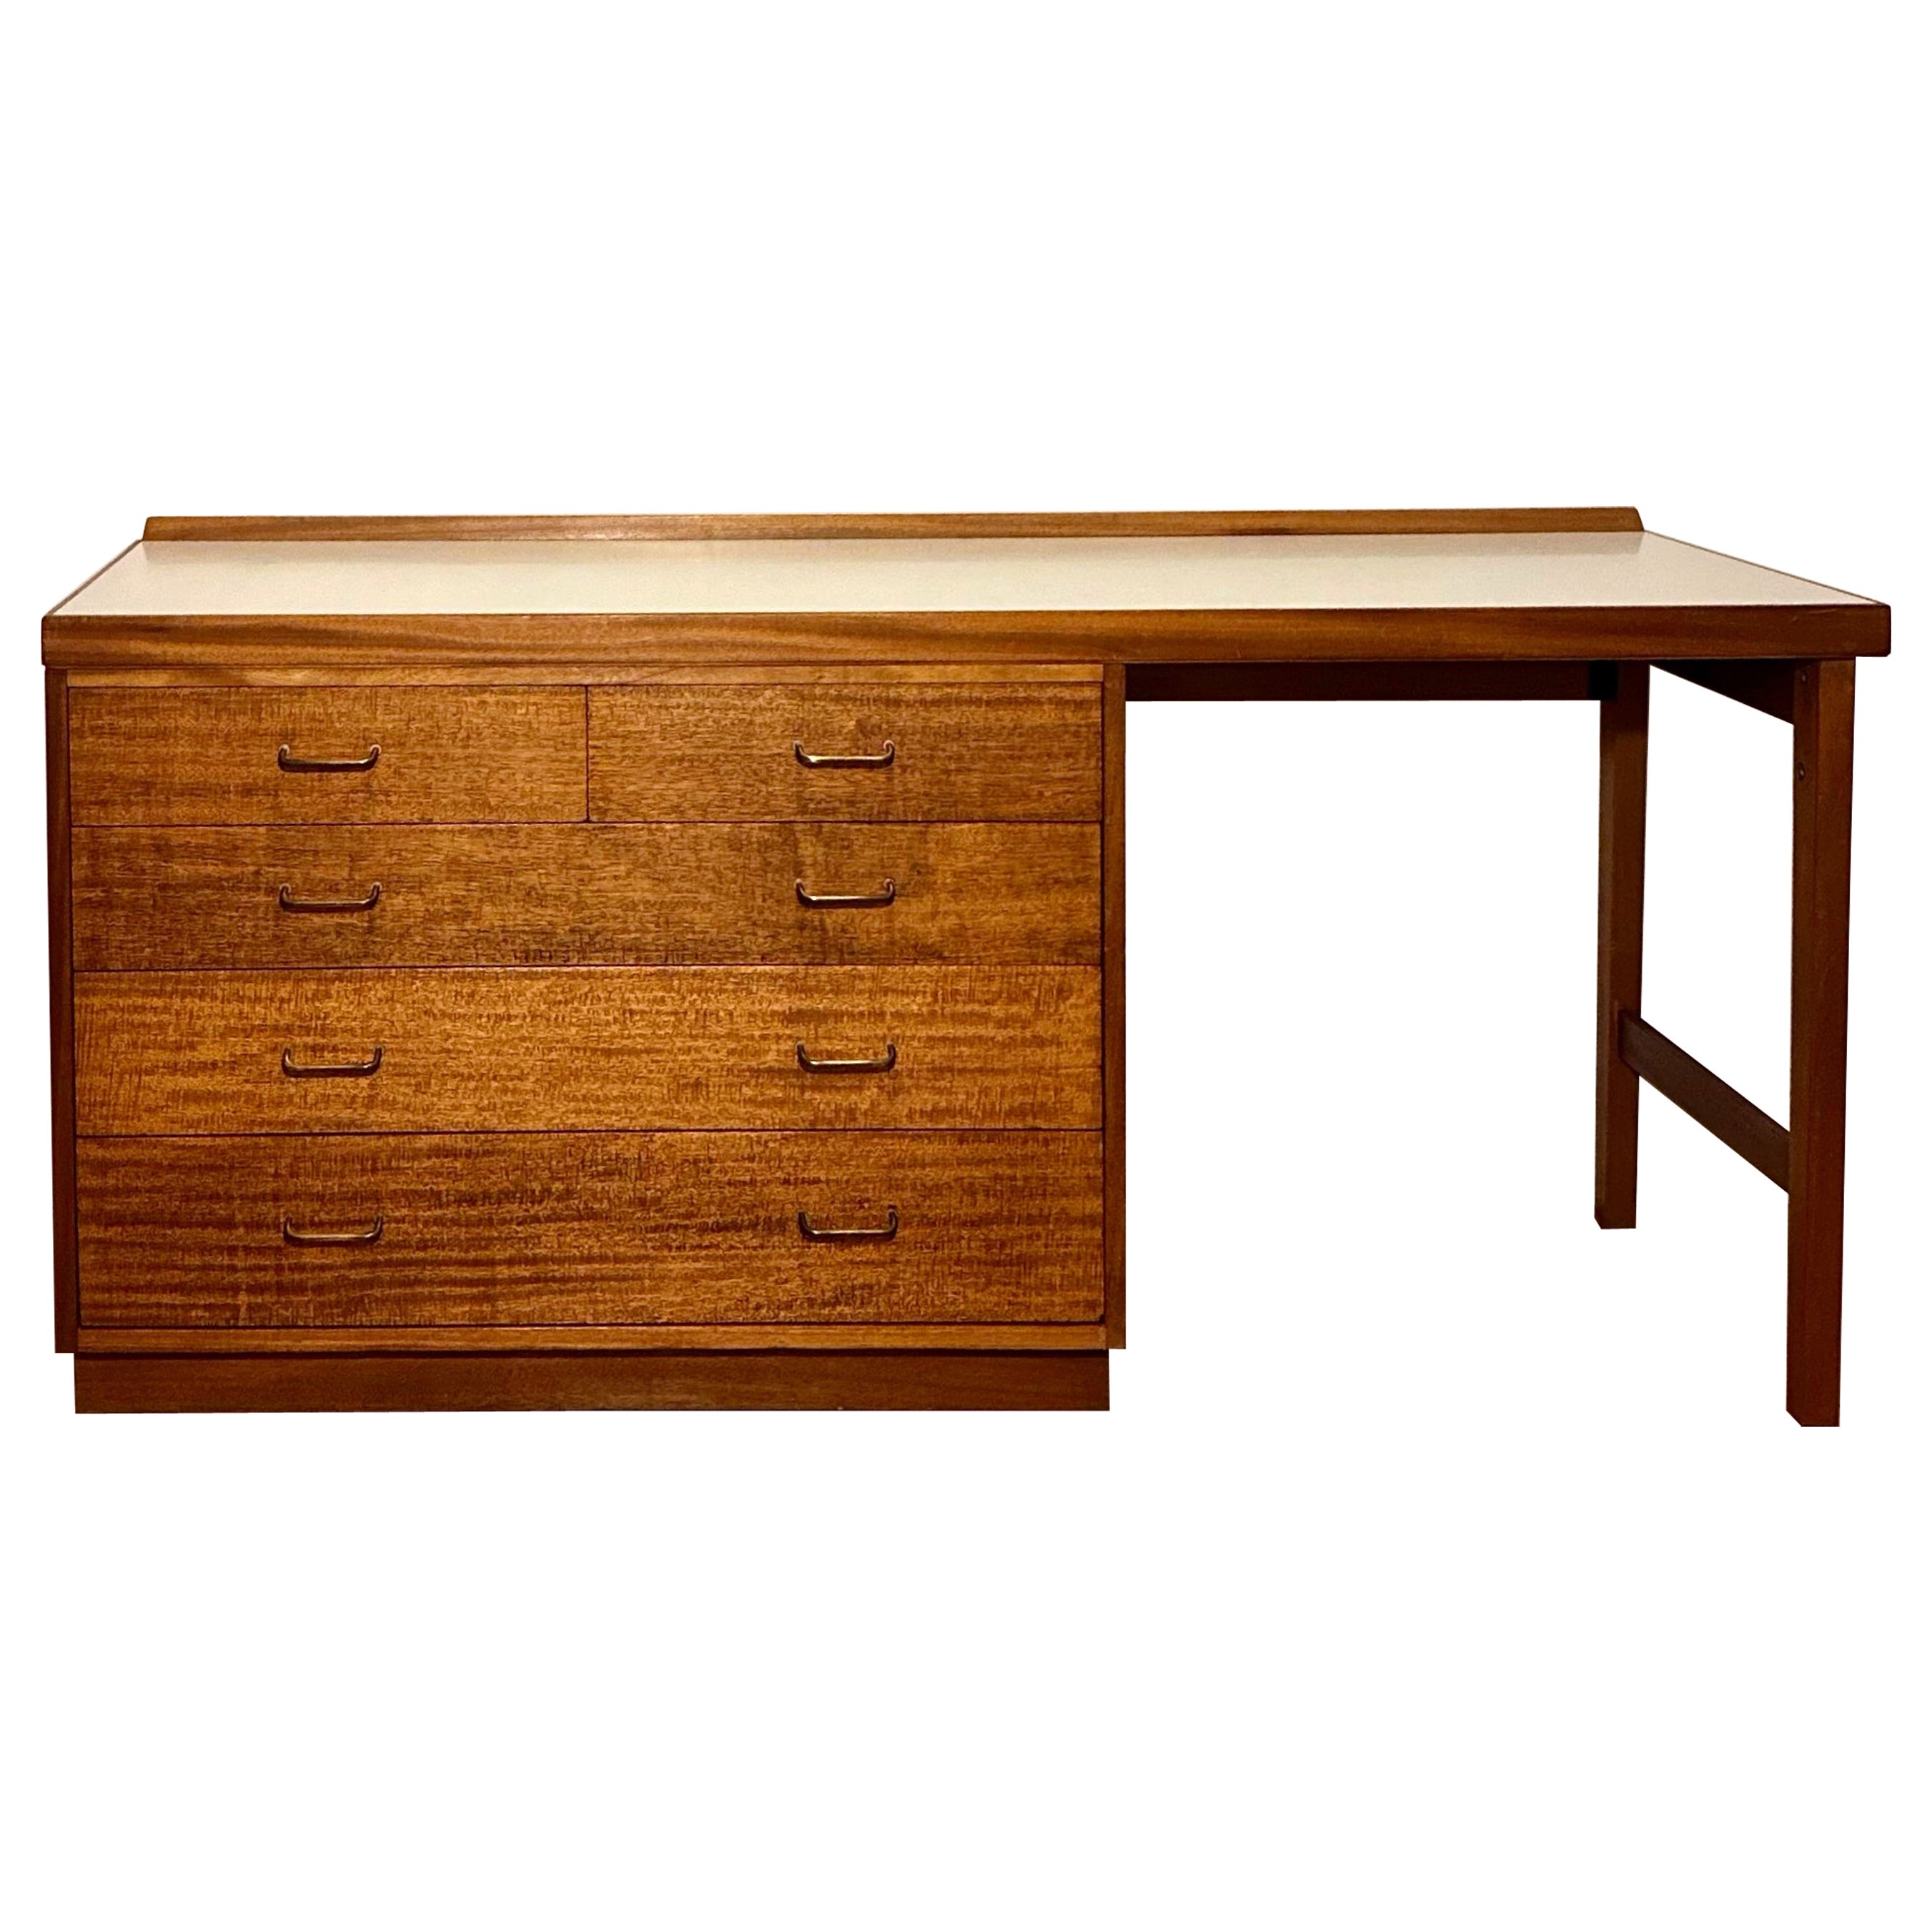 Very Rare Mid-Century Vintage Retro Teak Desk by Remploy For Sale